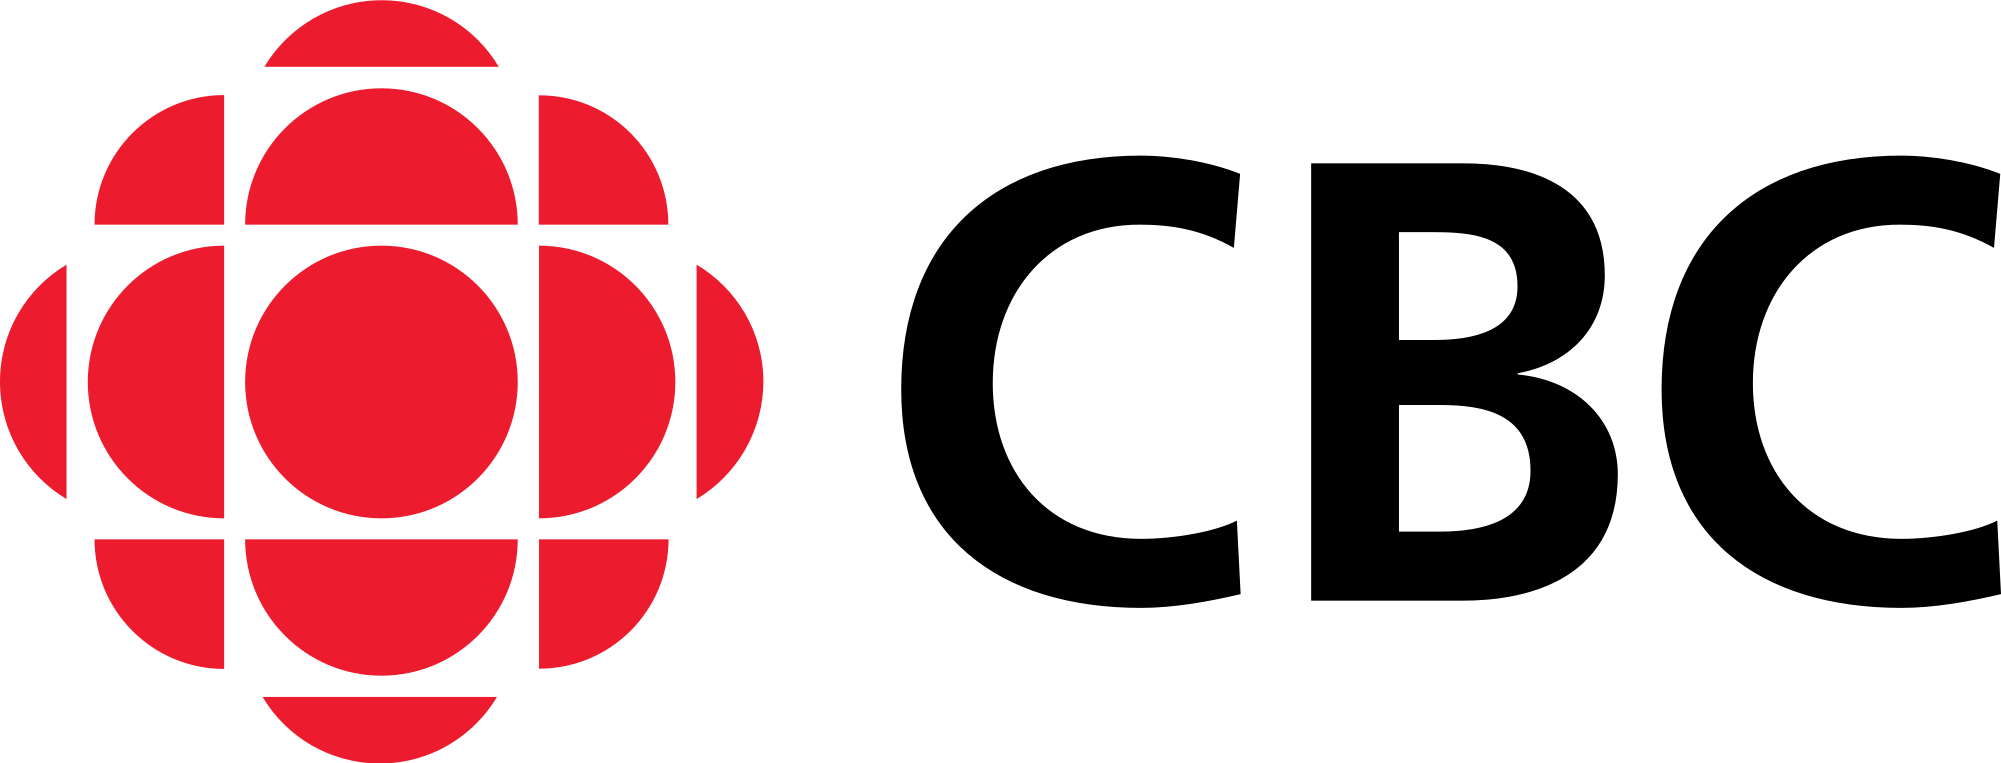 CBC Television - network